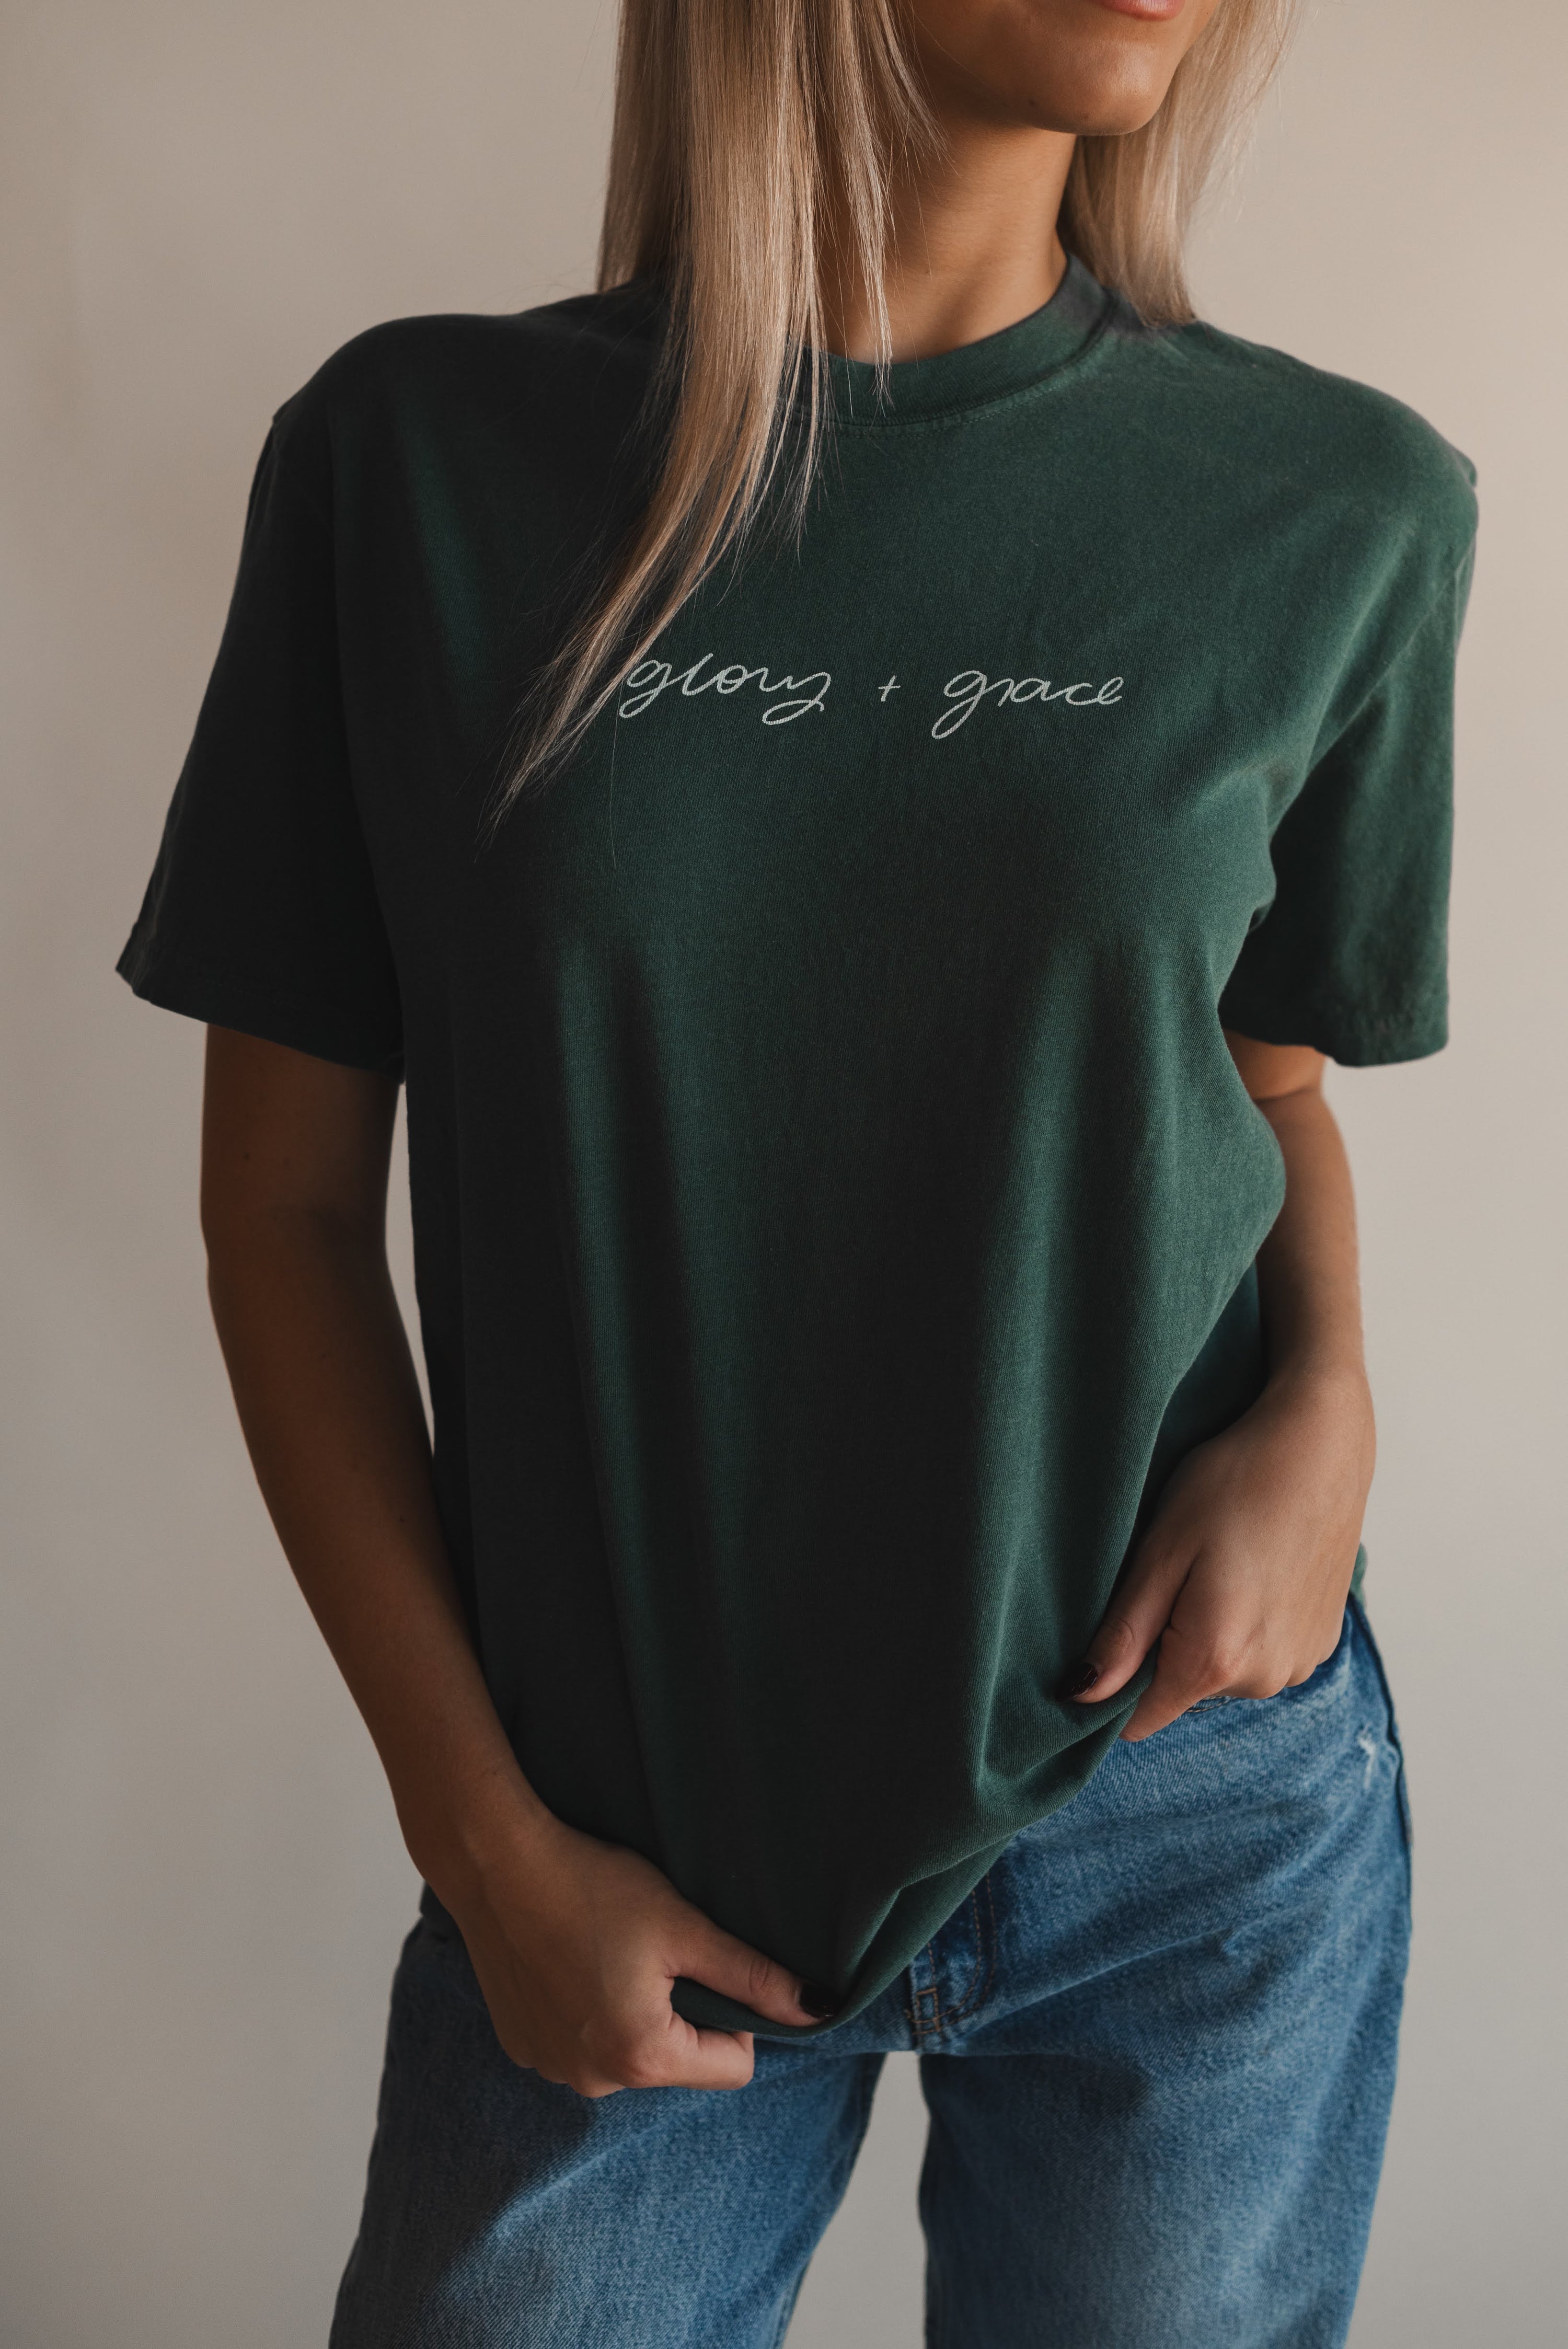 Glory + Grace Tee- Spruce